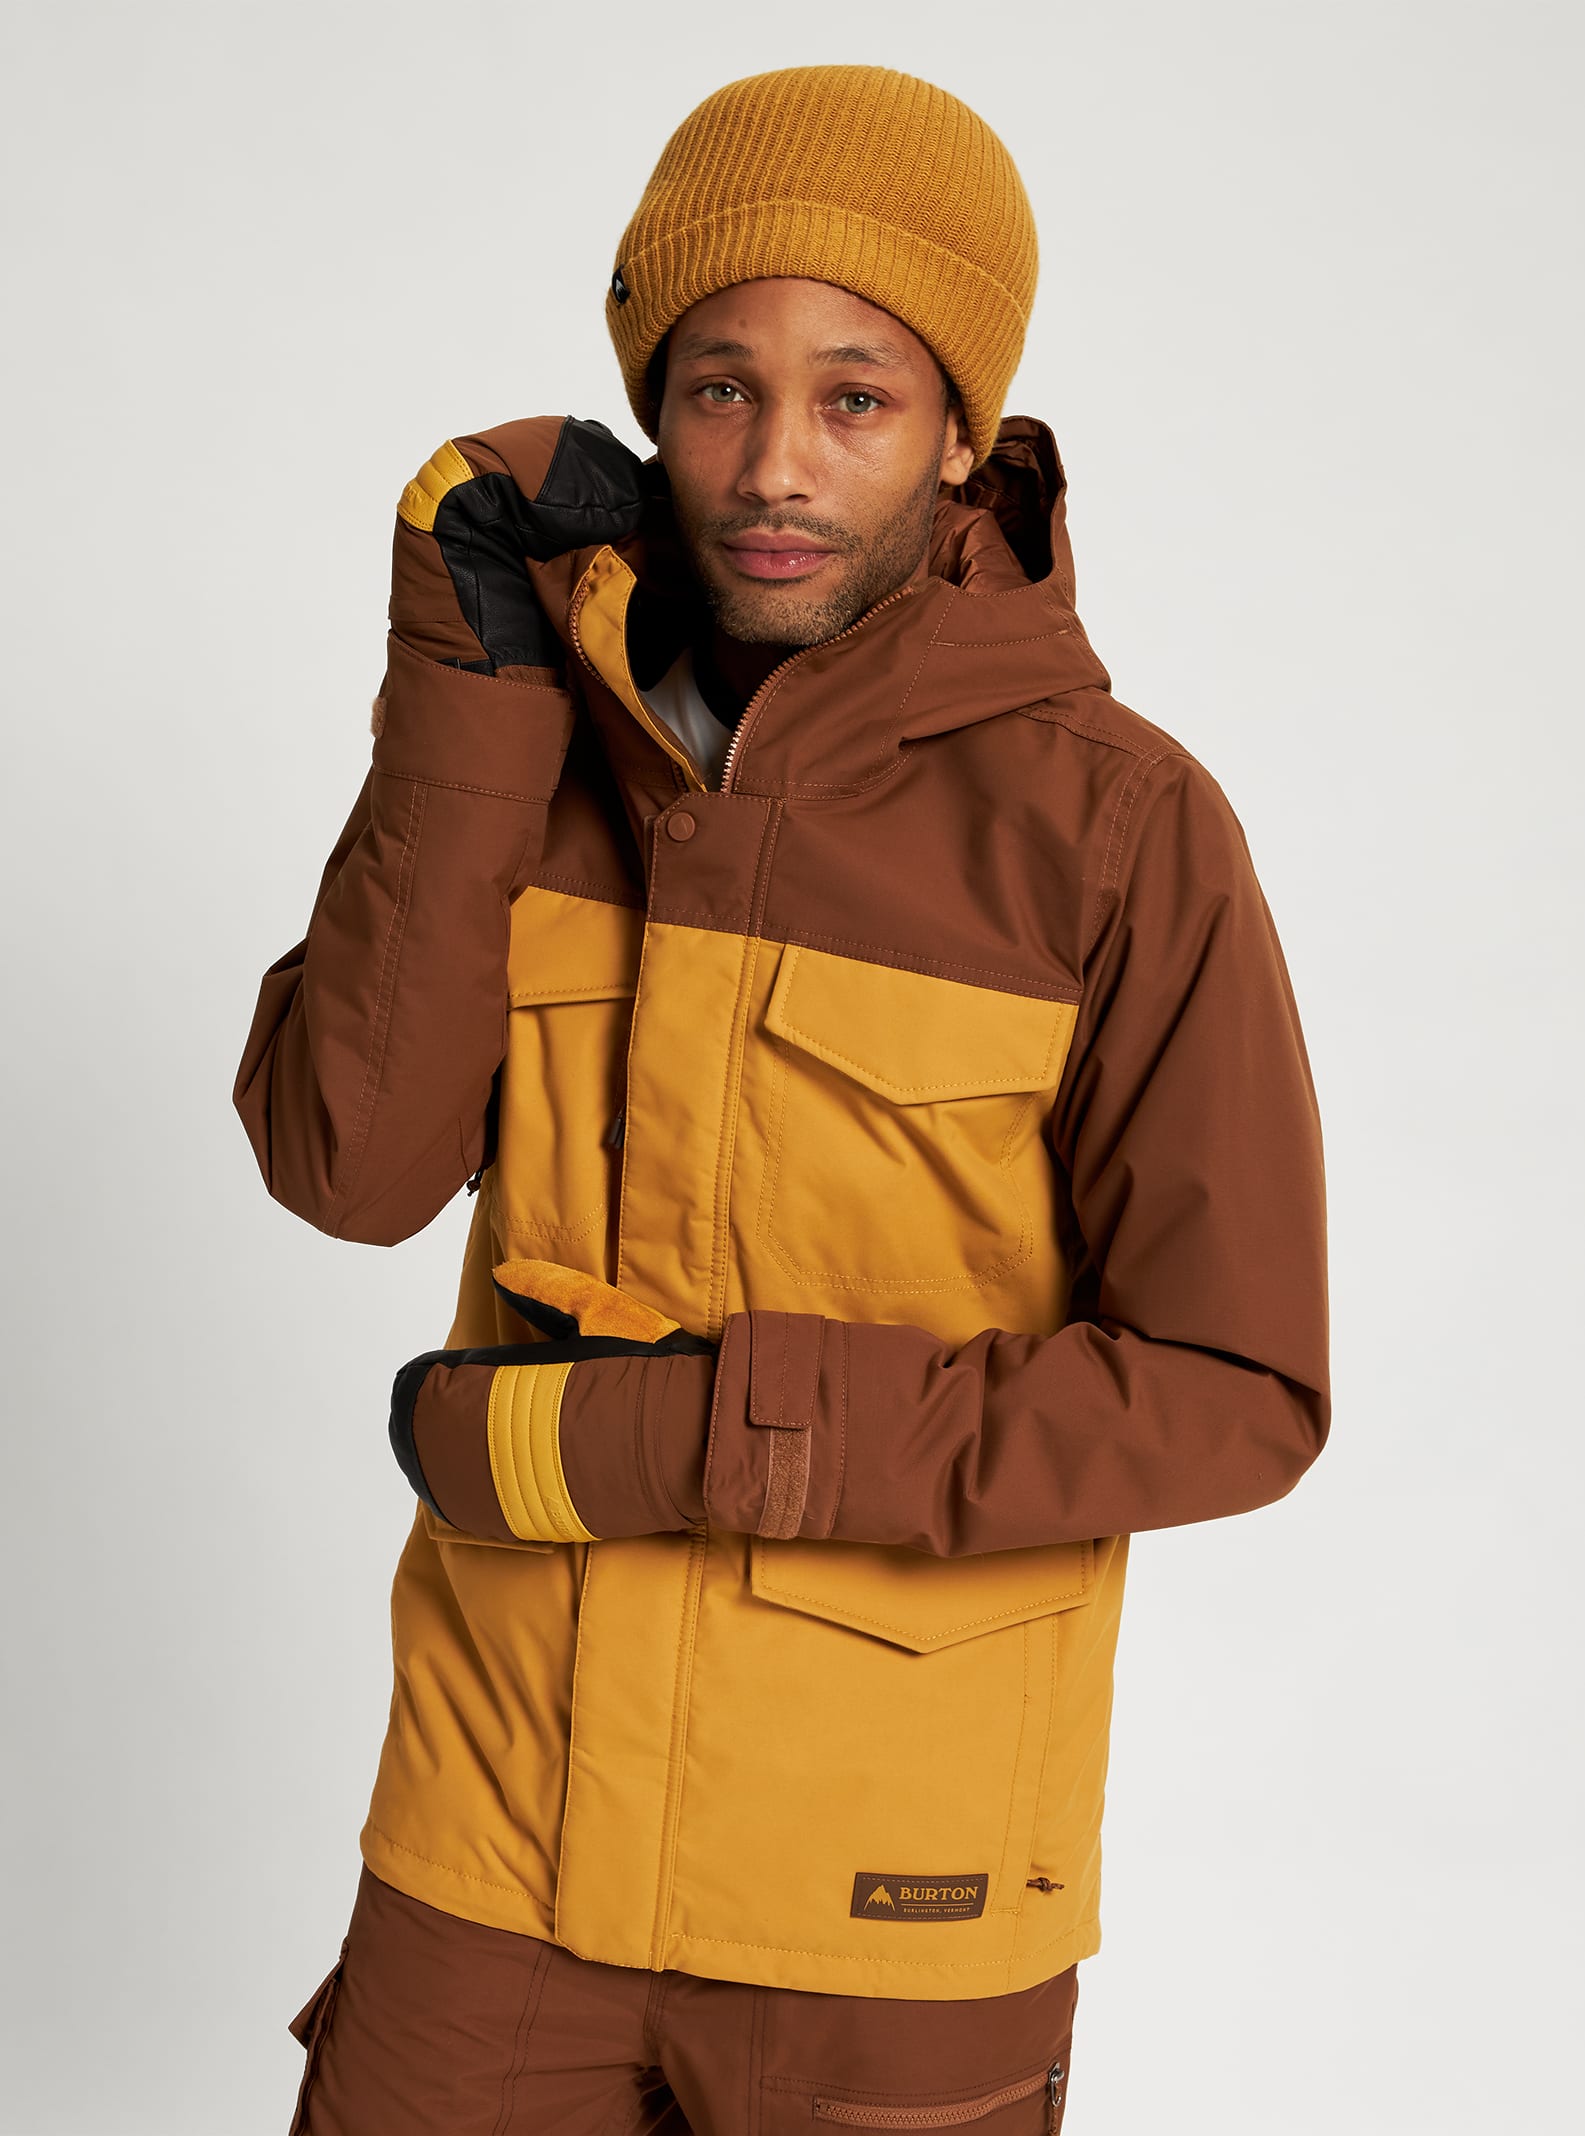 Shop Sale on Jackets For Men | Mens Coats & Blazers | Verishop